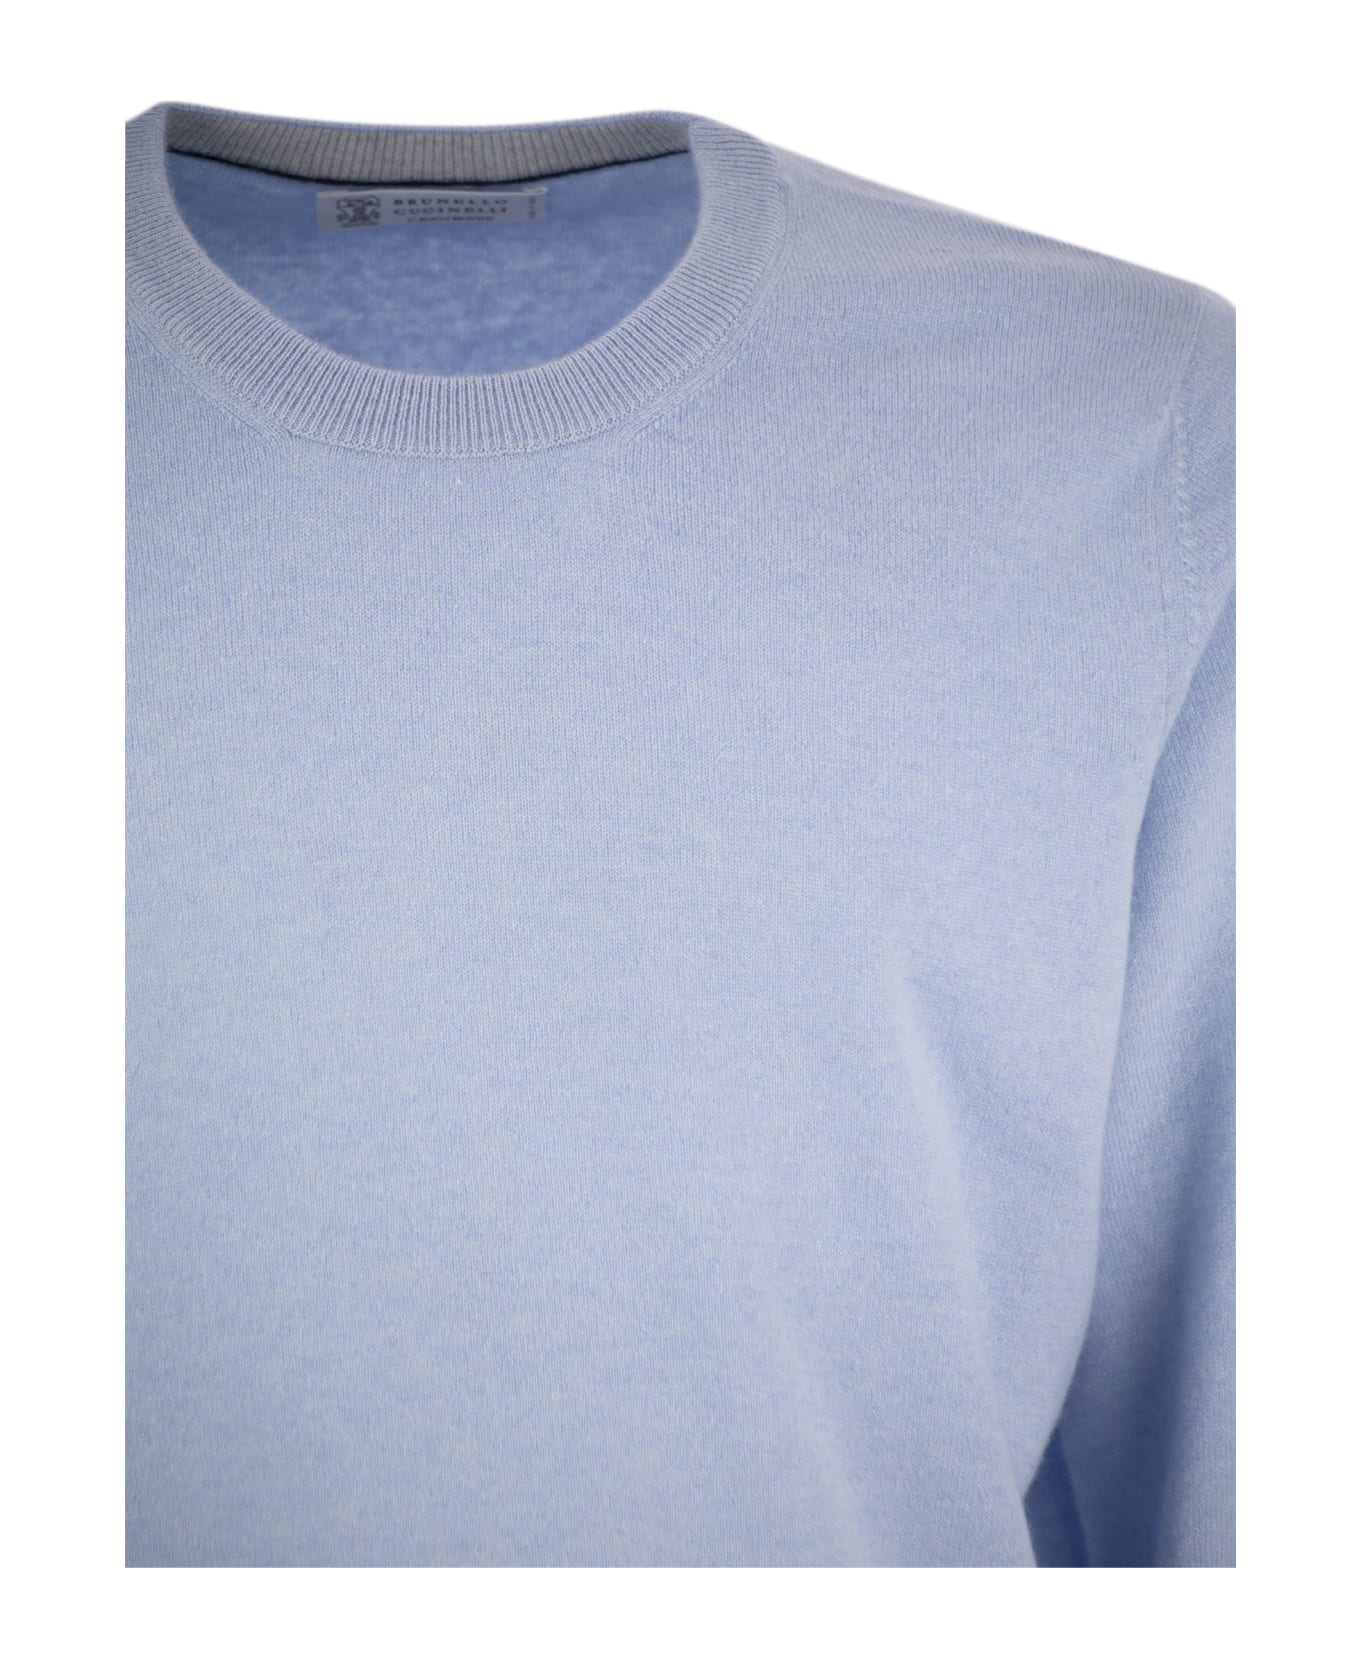 Brunello Cucinelli Cashmere Crew-neck Sweater - Light Blue ニットウェア